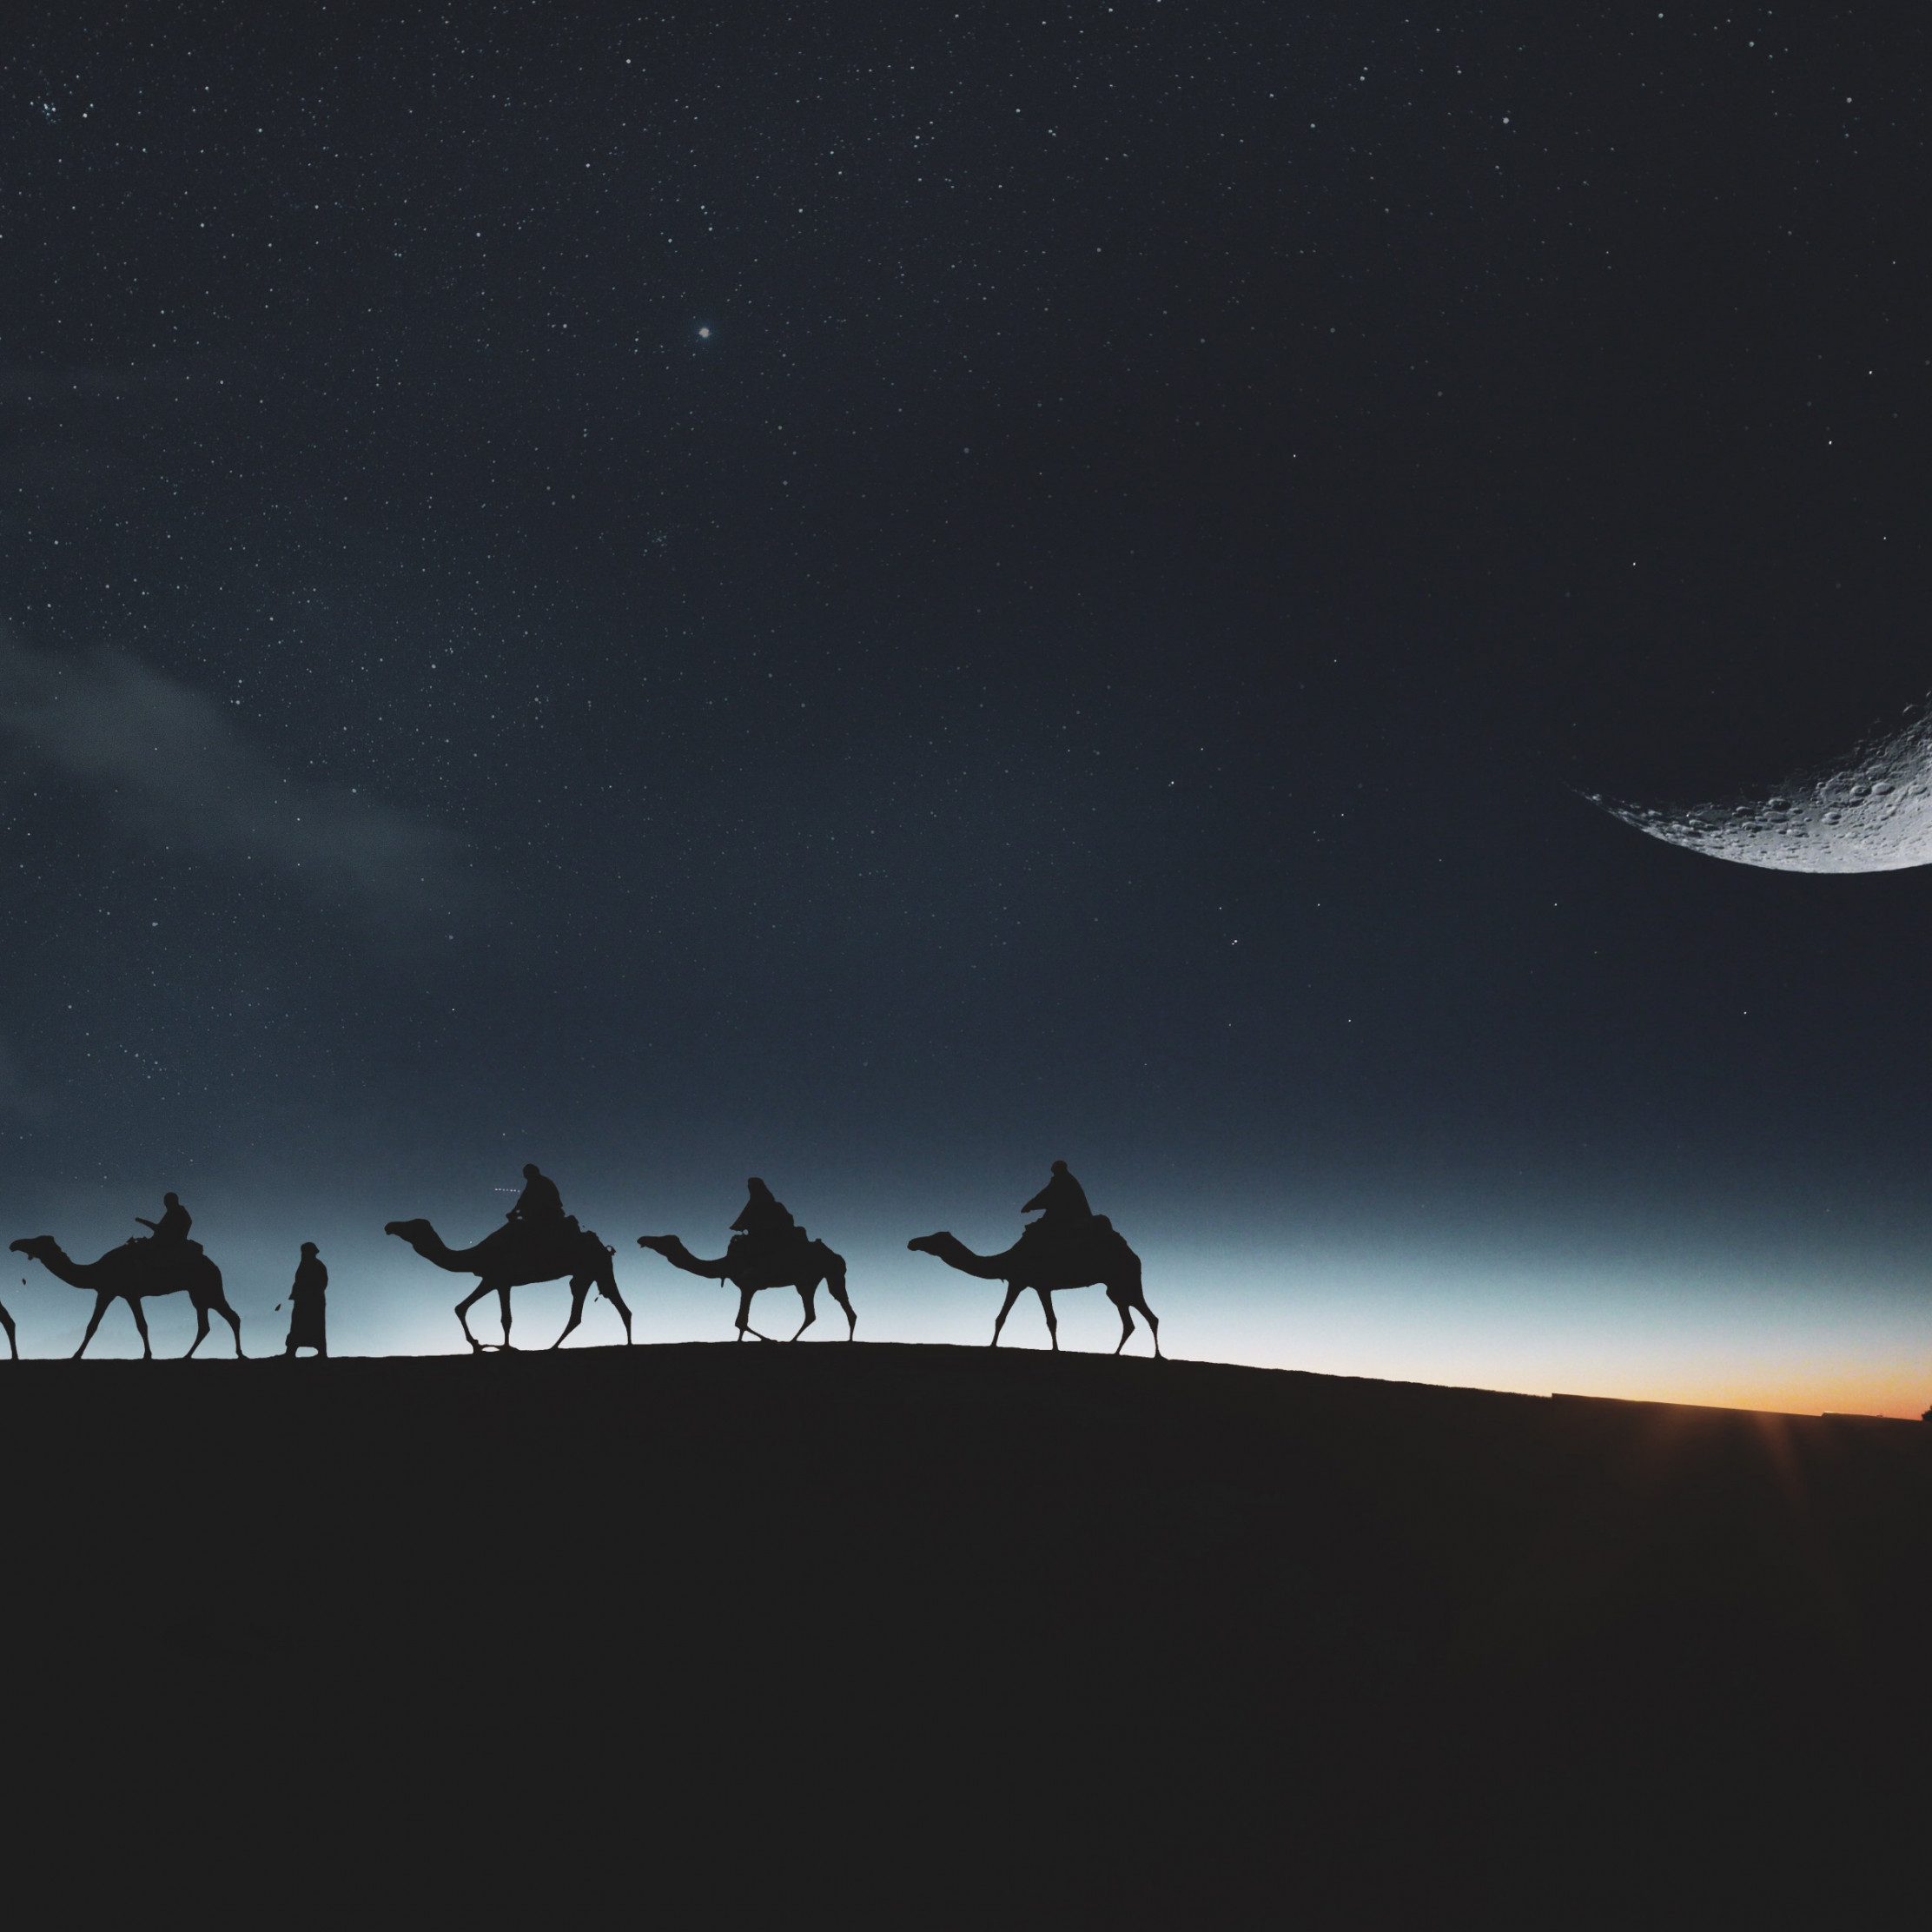 Download wallpaper: Traveling through desert on camels 2224x2224